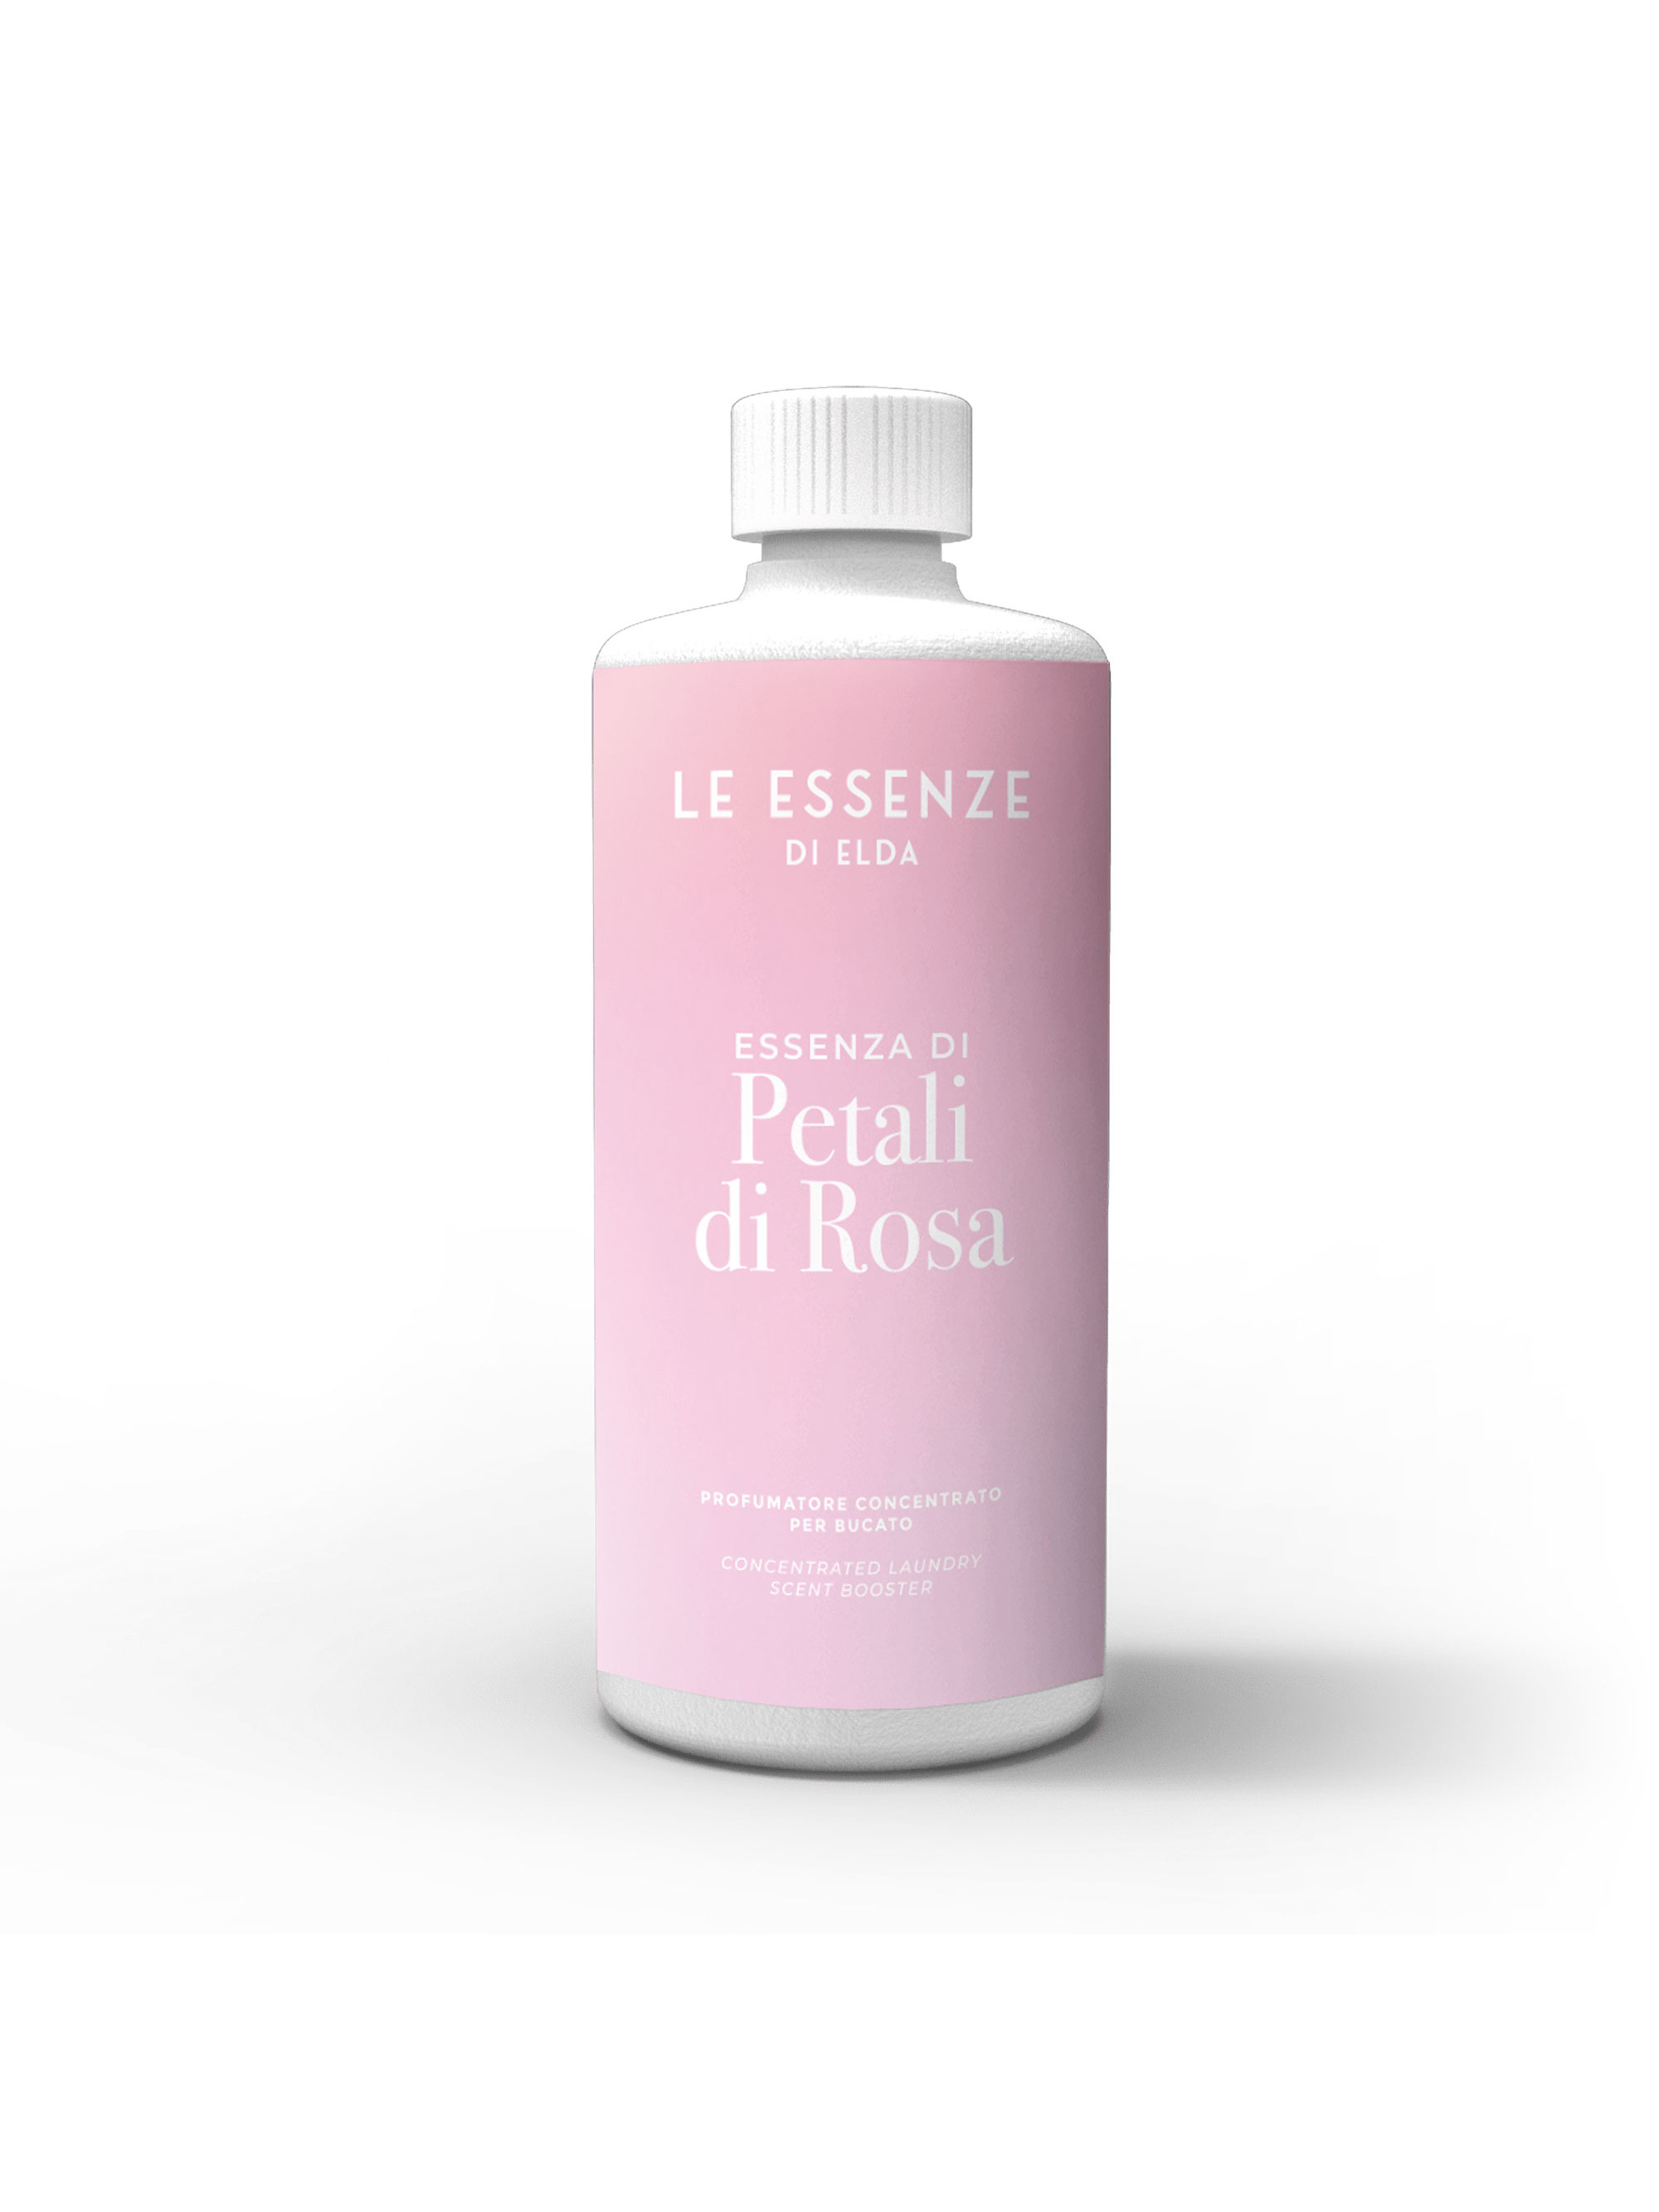 Essenza Petali di Rosa - 500 ml Wäscheparfümierer